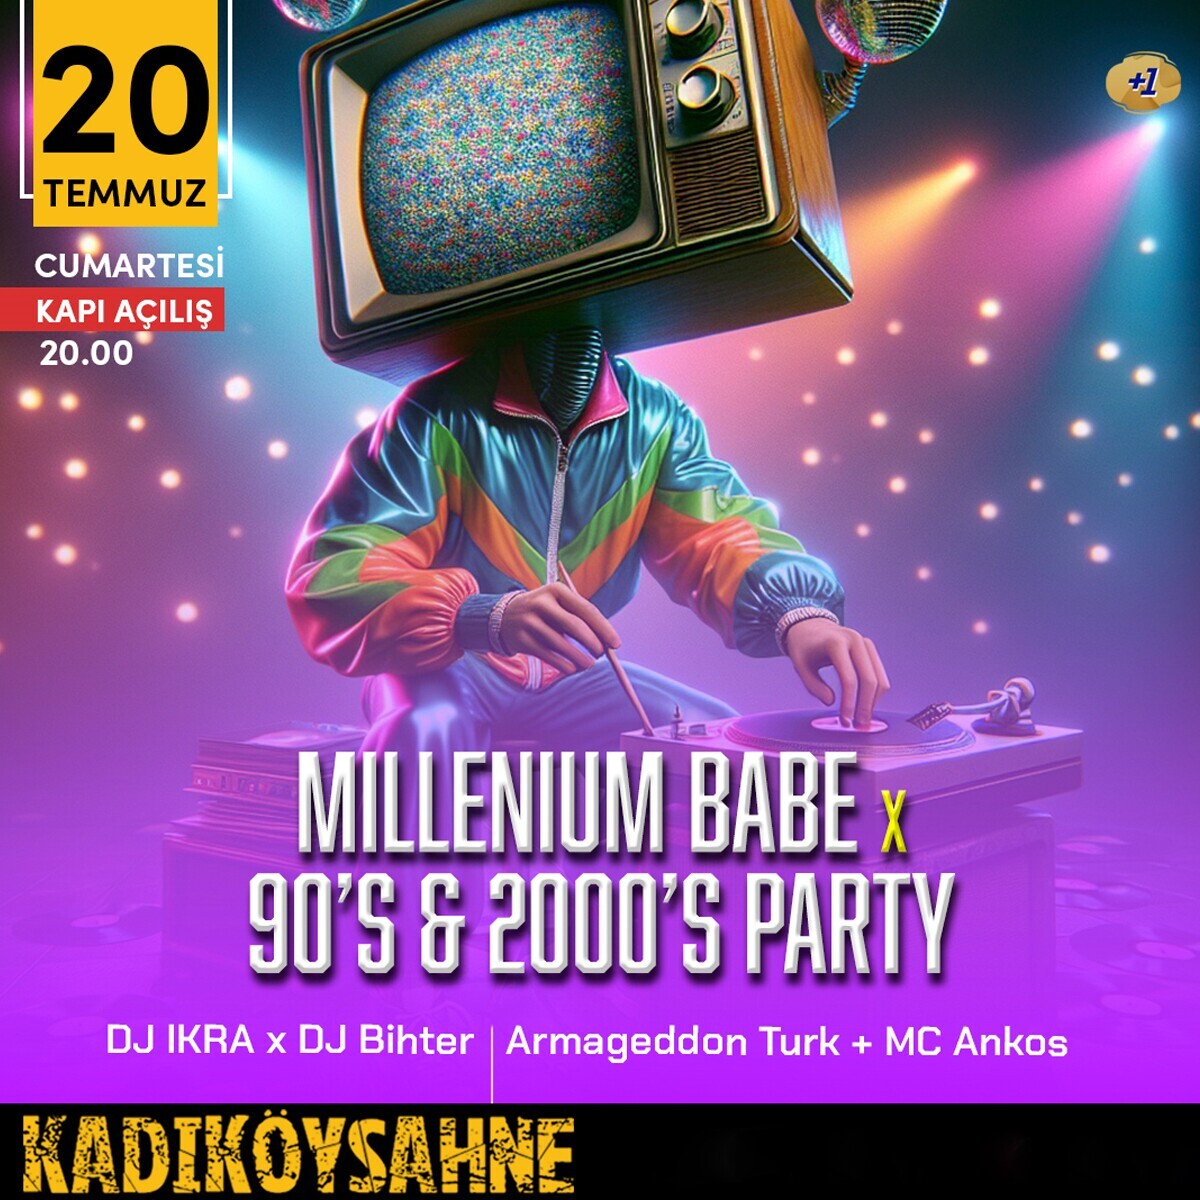 Millenium Babe x 90’s & 2000’s Party Gecesi Konser Bileti